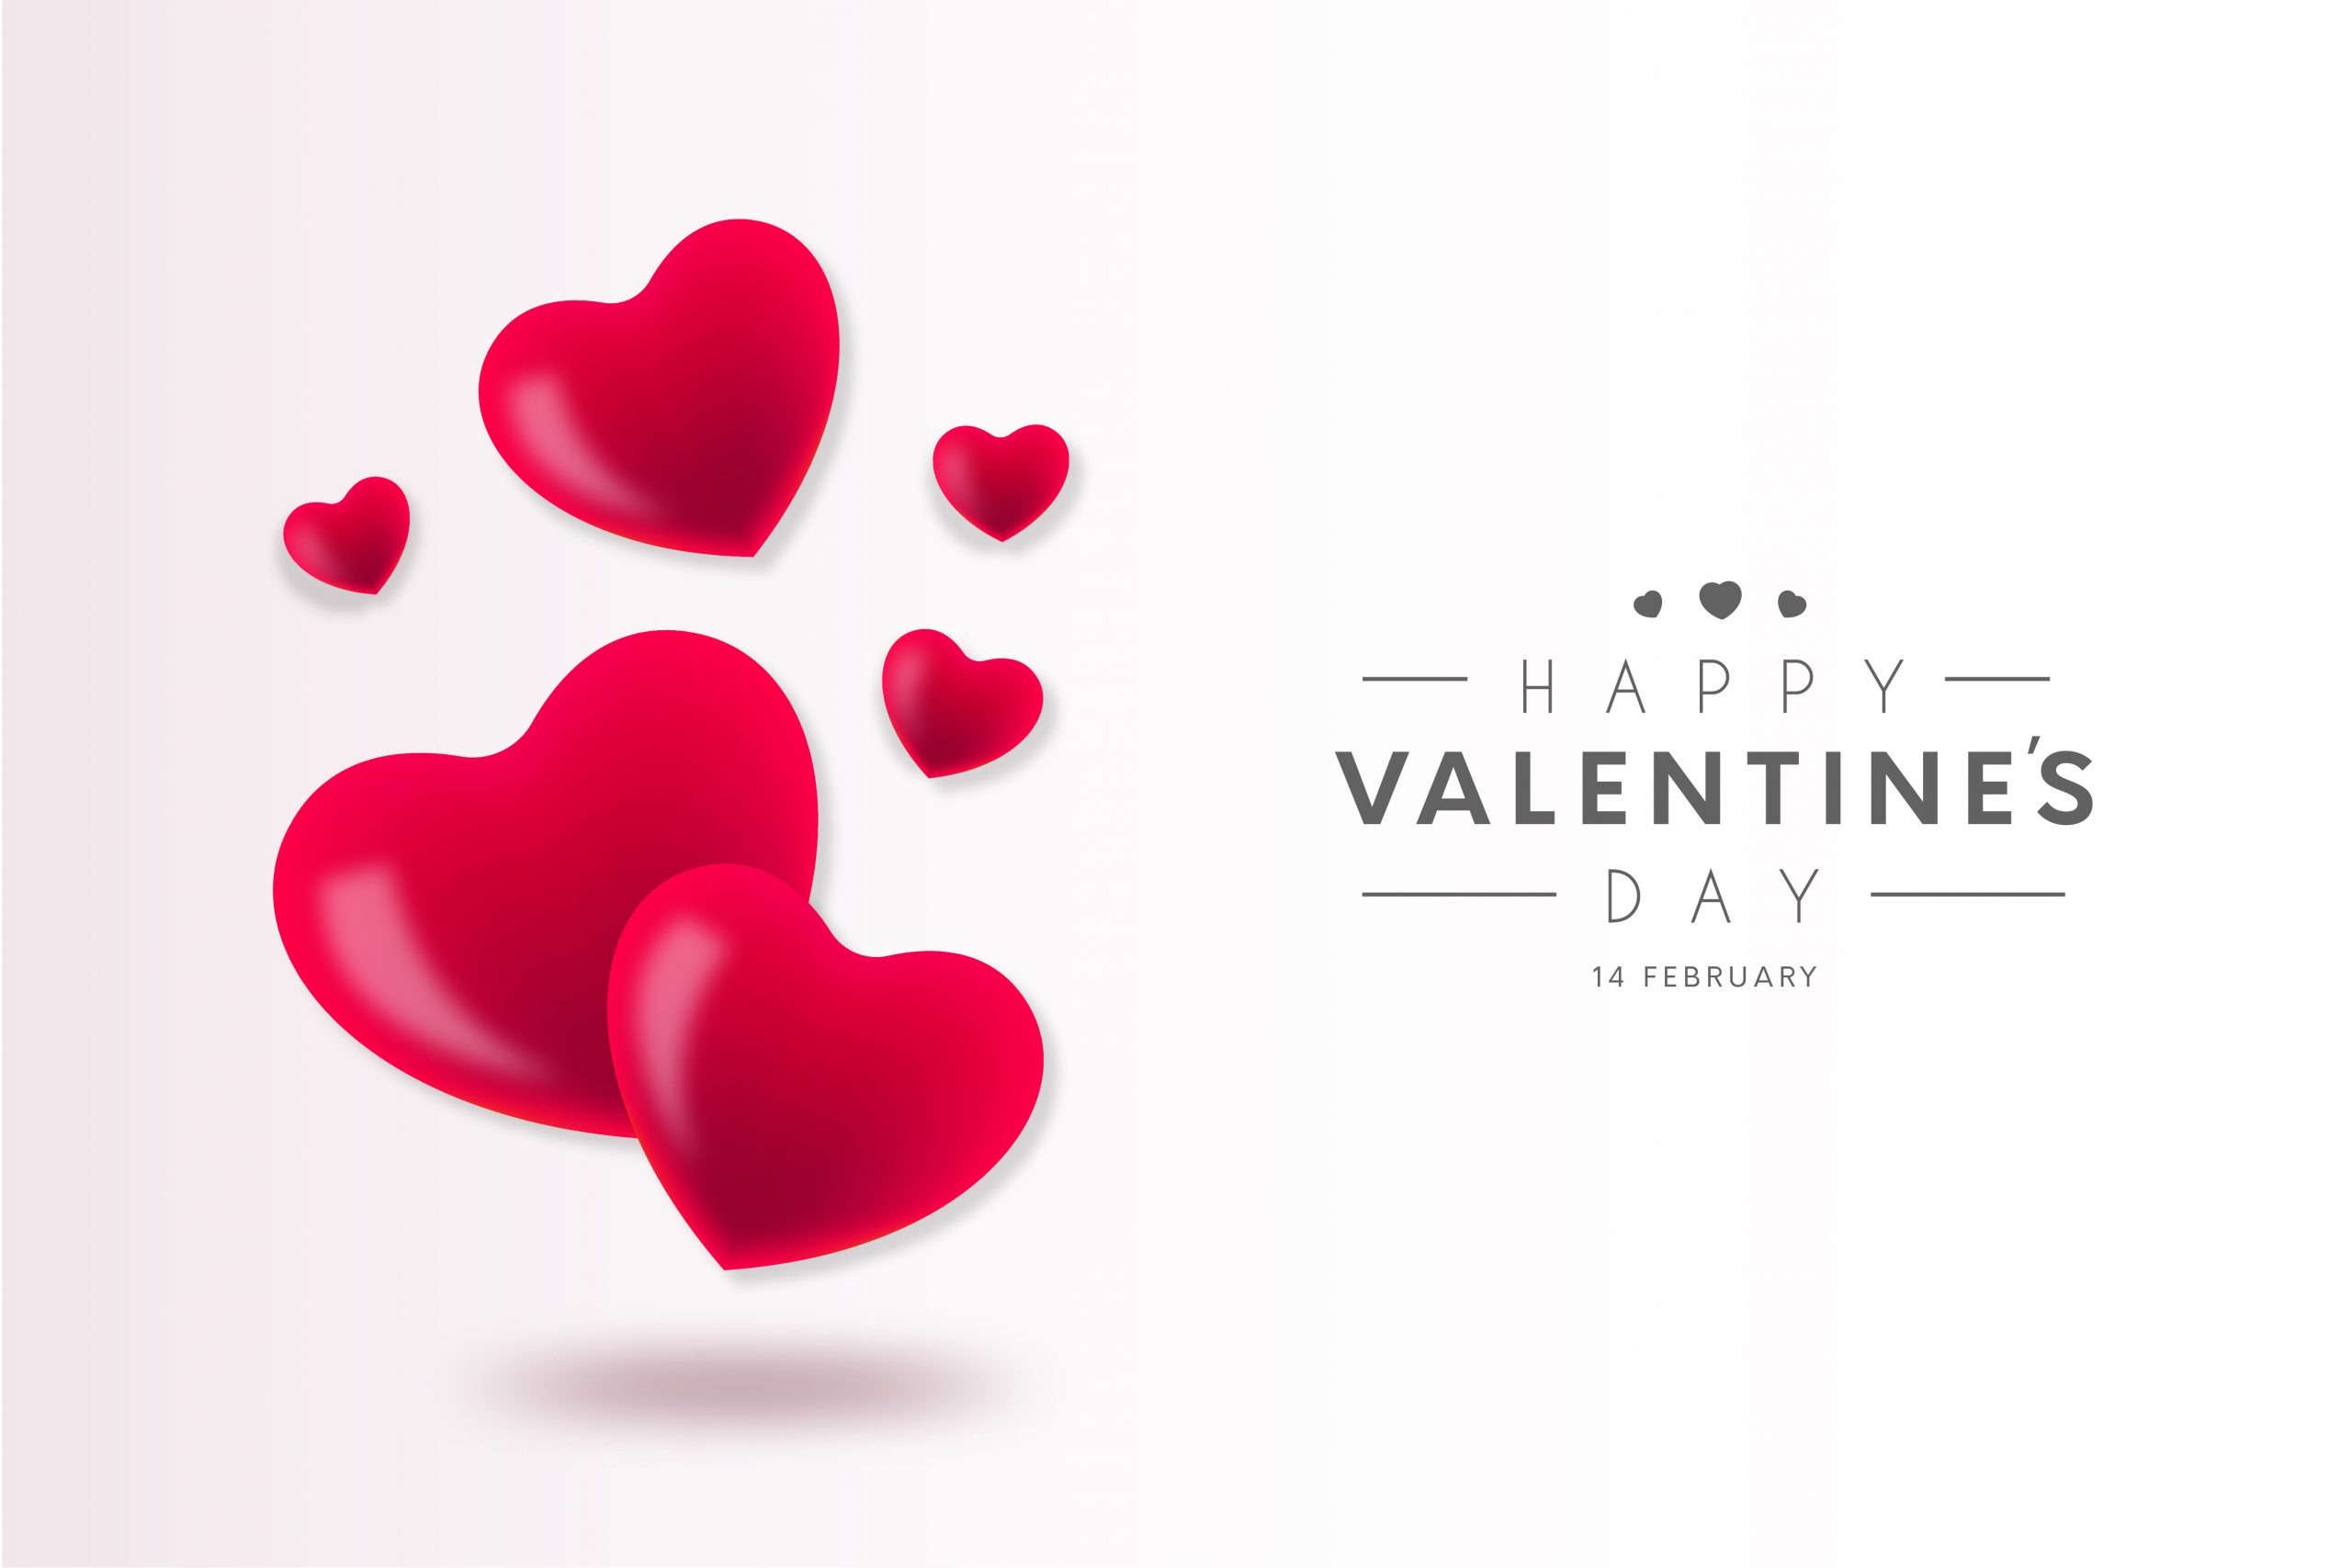 Happy Valentines Day 2022 Image & Photo Free Download